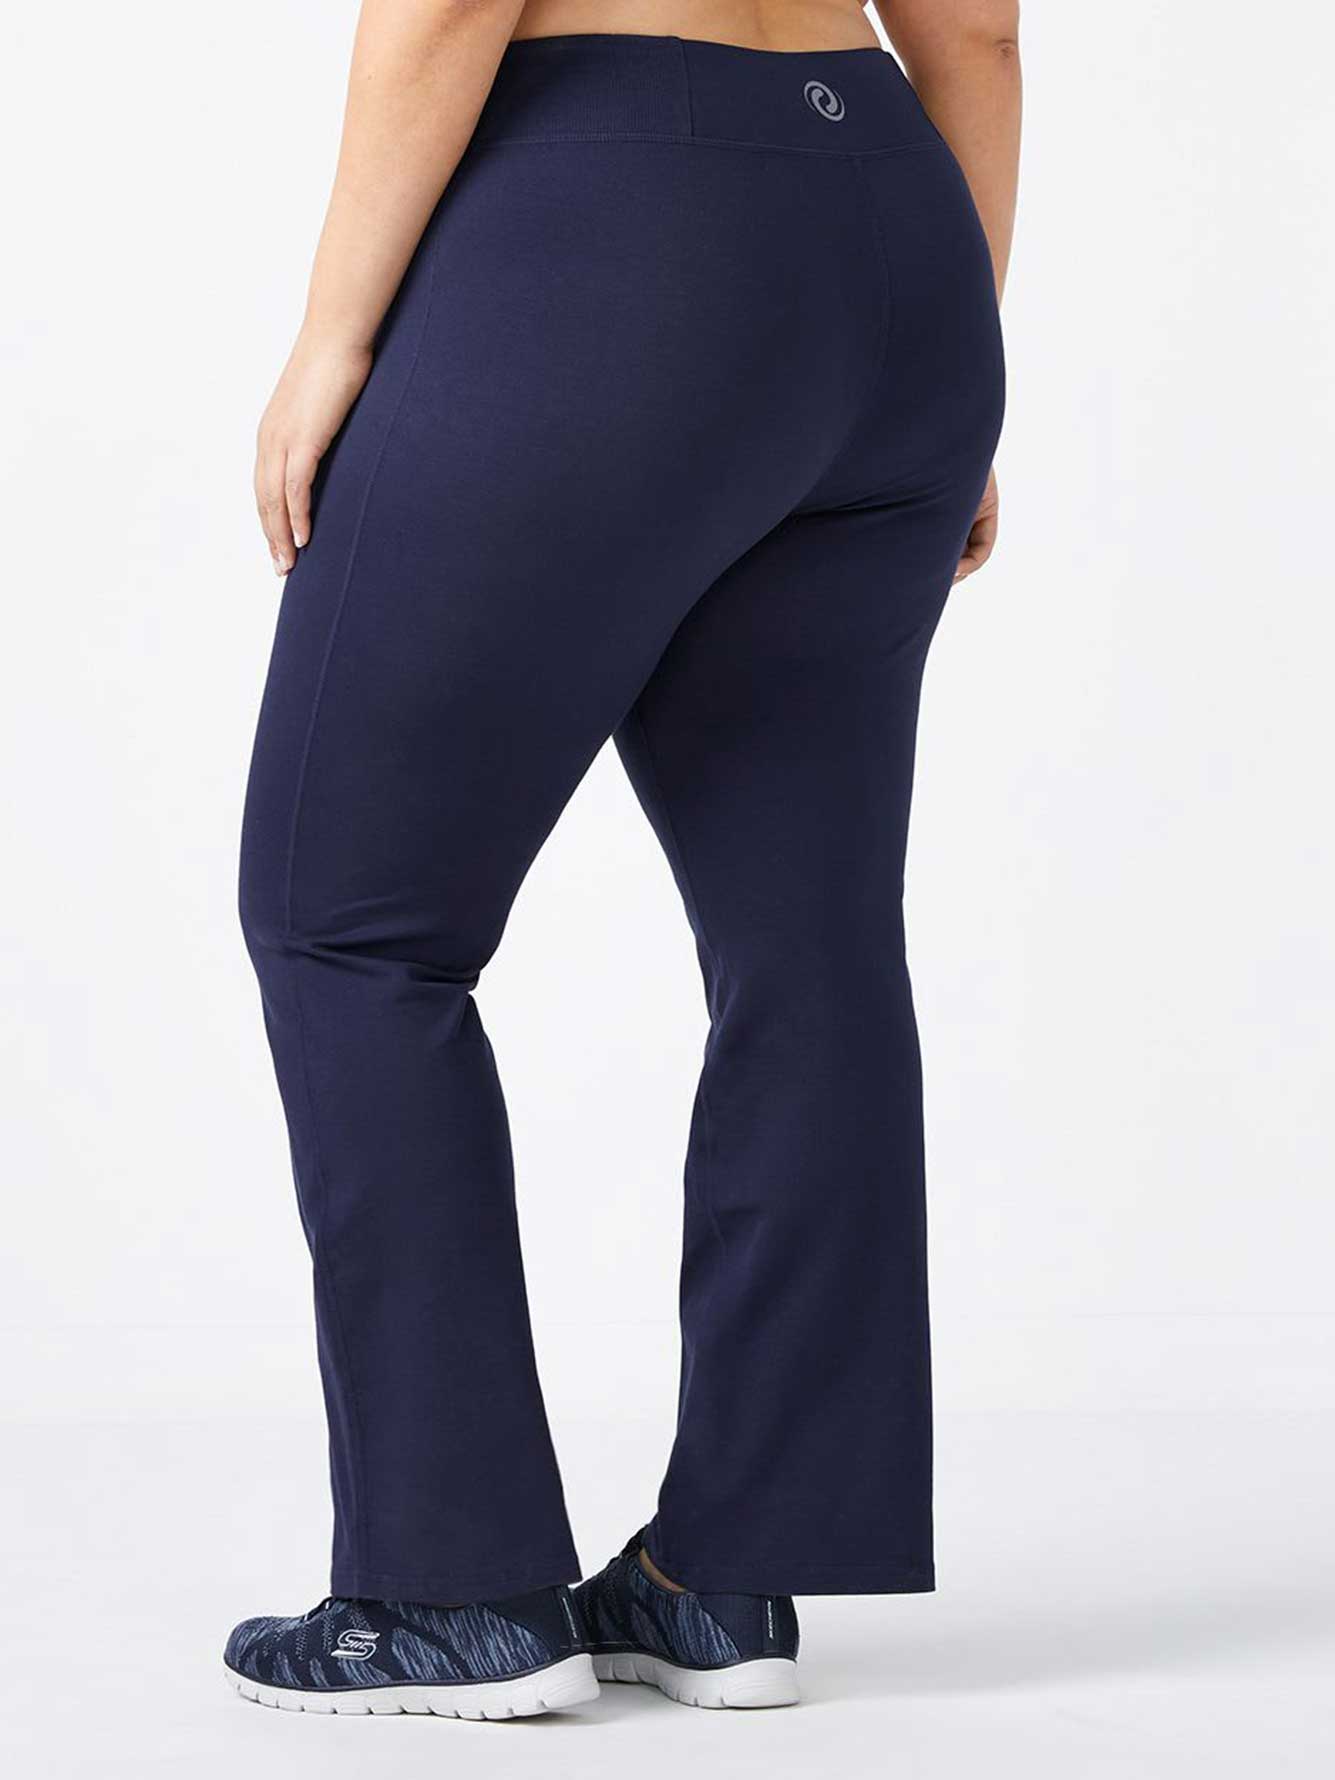 Cathalem Yoga Pants for Women Petite Length Exercise Yoga Waist Bubble  Running Yoga Pants for Women Tall Length Mesh Lift Pants Sky Blue Small 